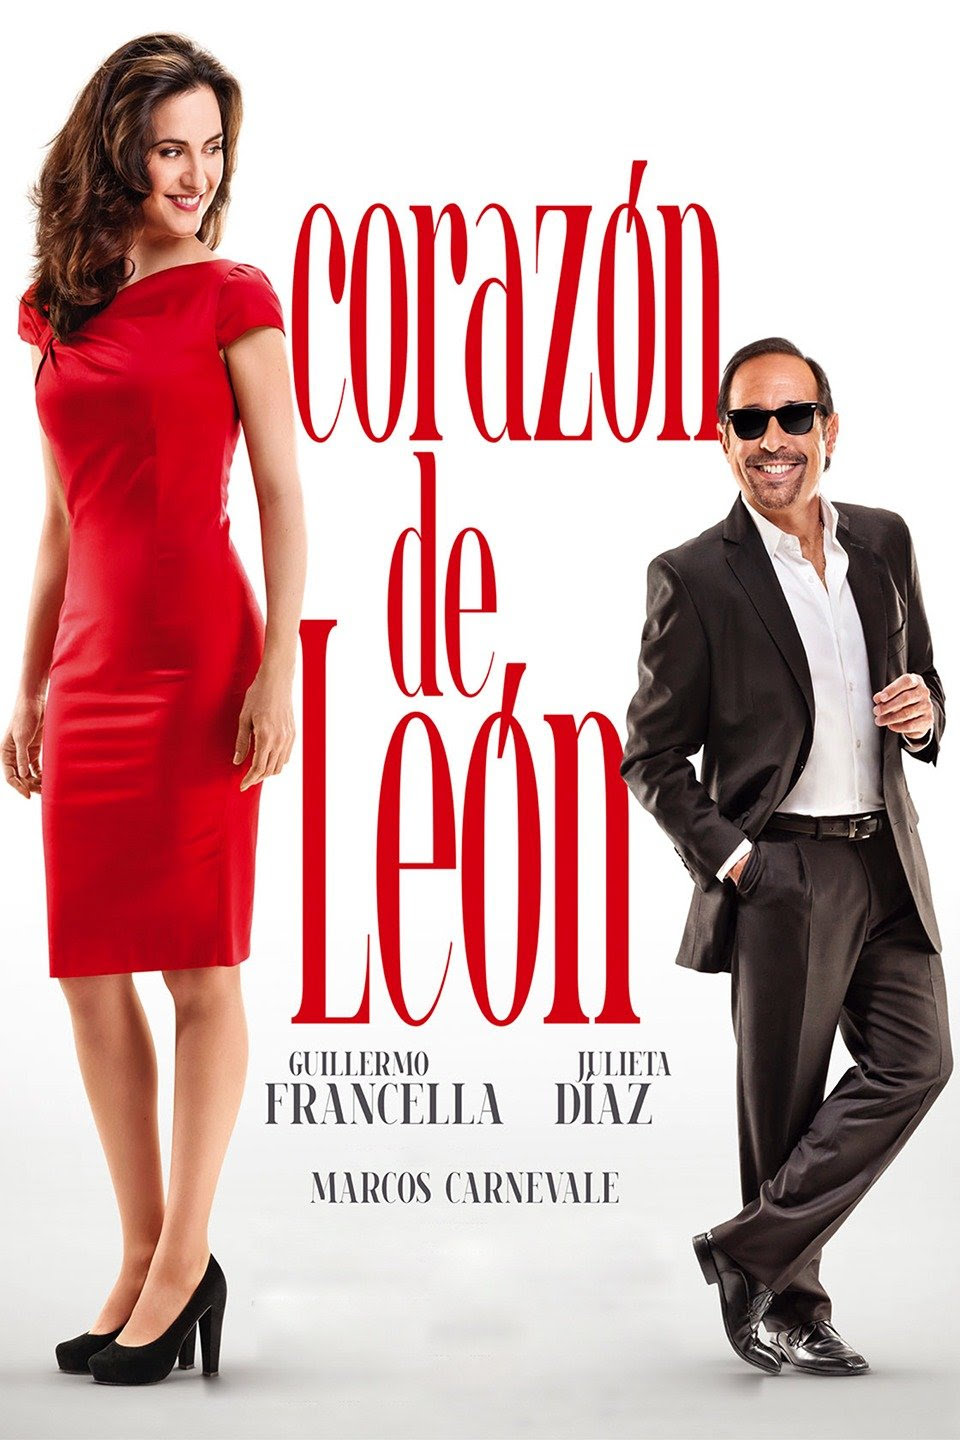 Corazón de León images